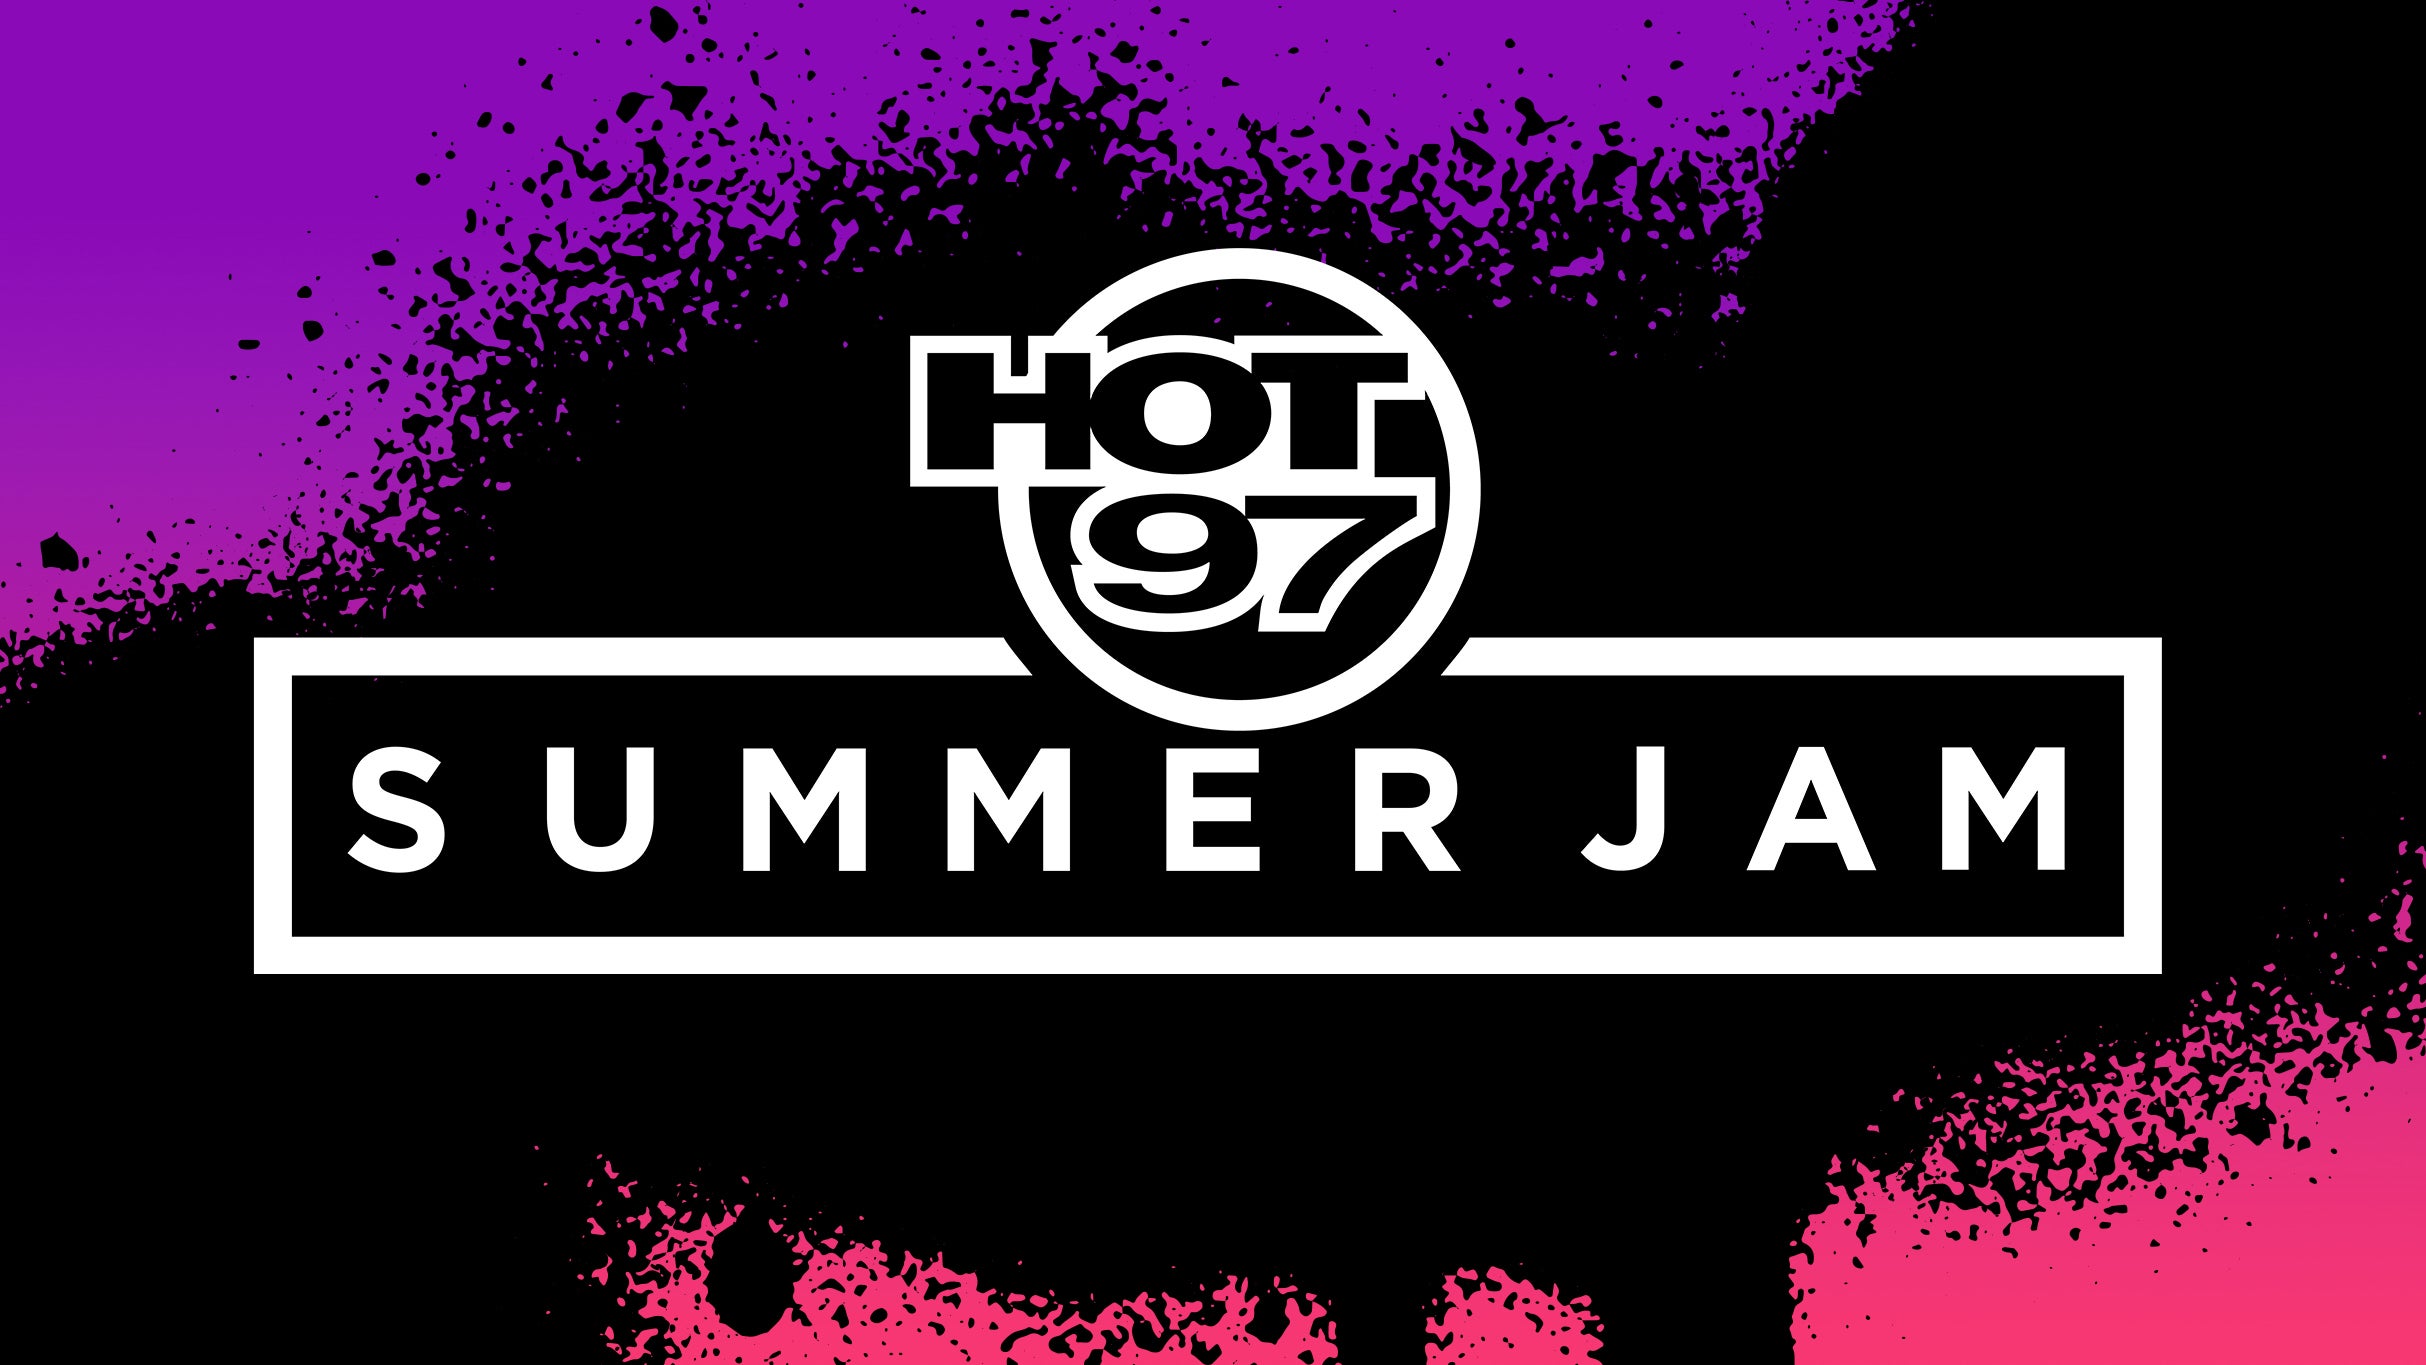 HOT 97 Summer Jam in Belmont Park - Long Island promo photo for Hot 97 presale offer code